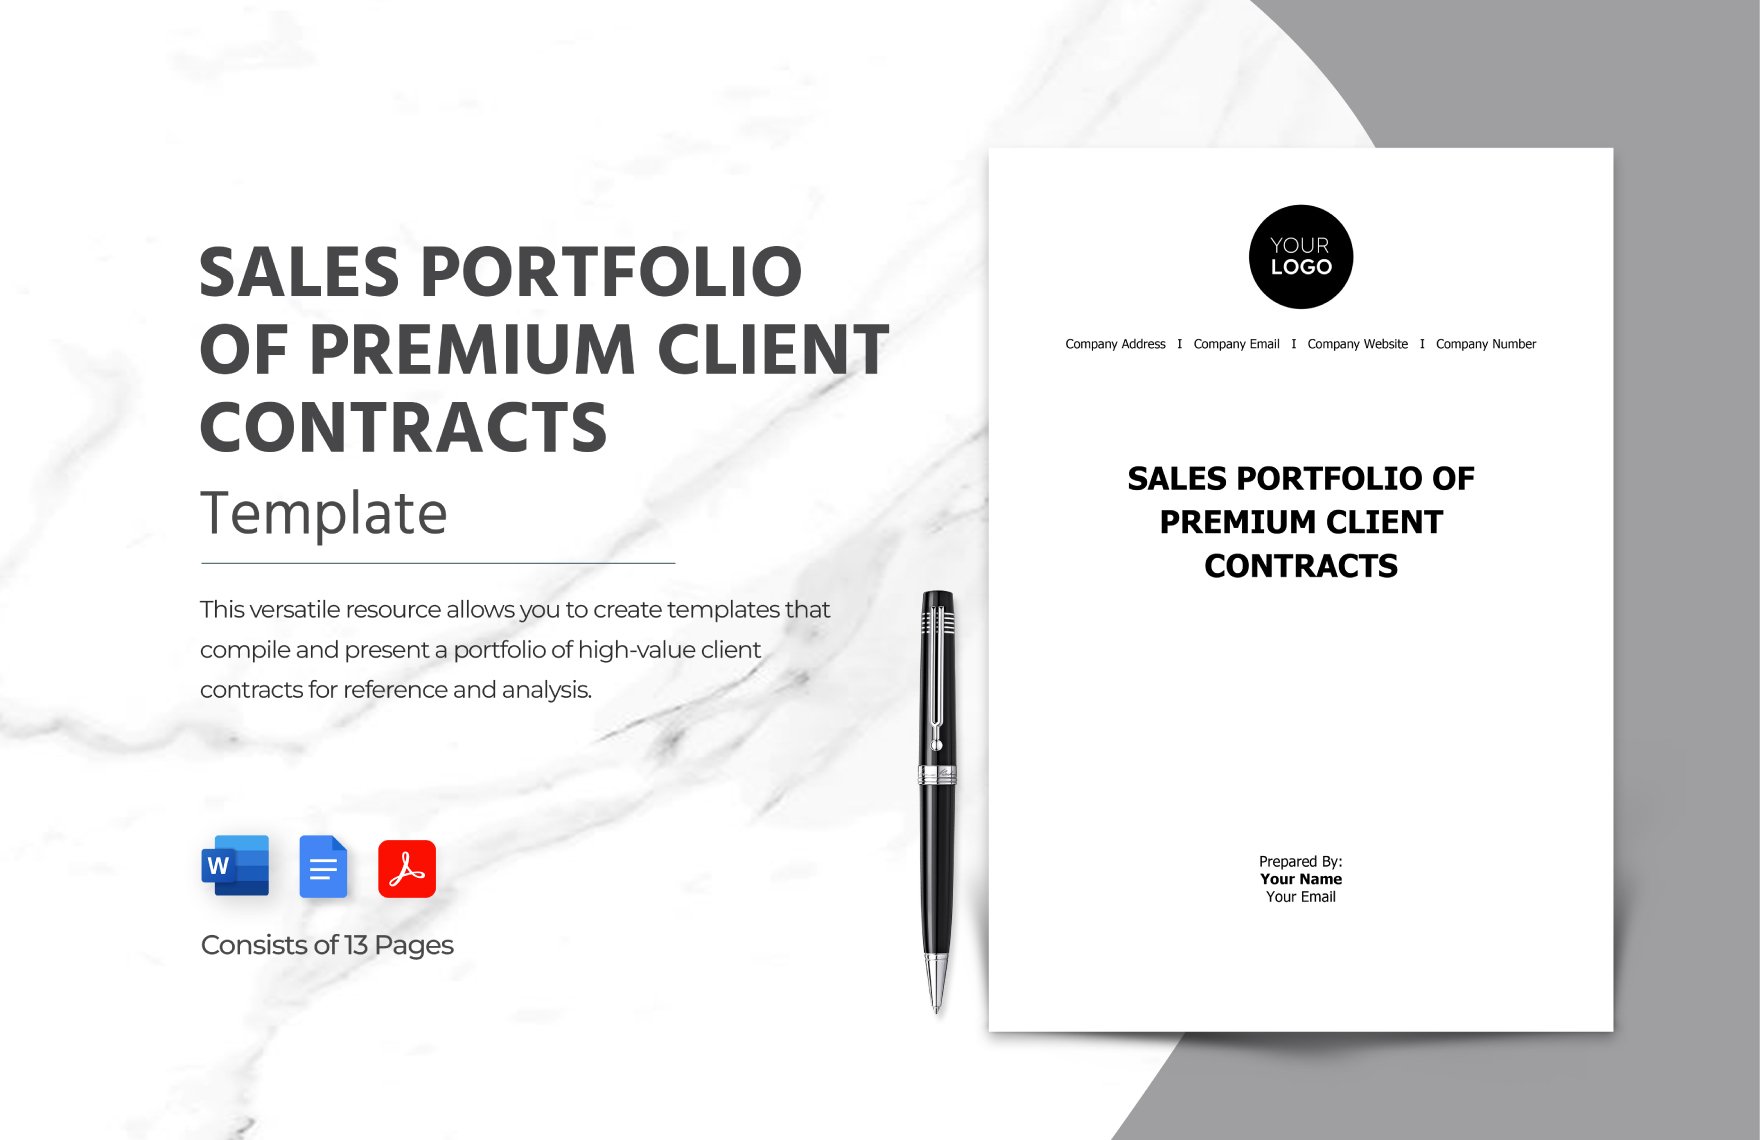 Sales Portfolio of Premium Client Contracts Template